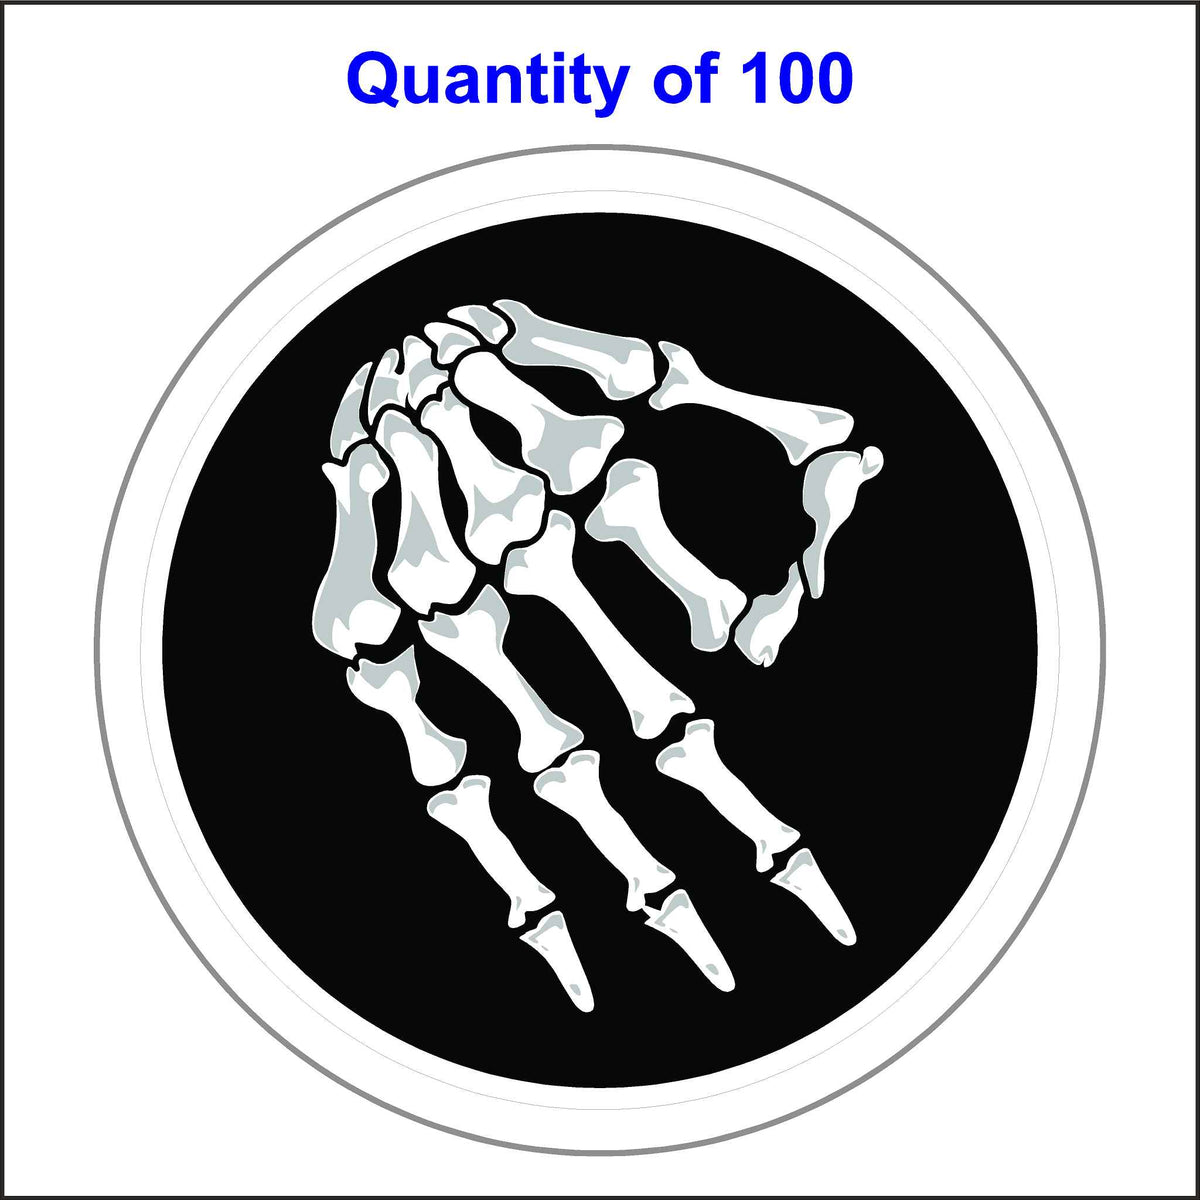 Skeleton Circle Game Sticker. 100 Quantity.